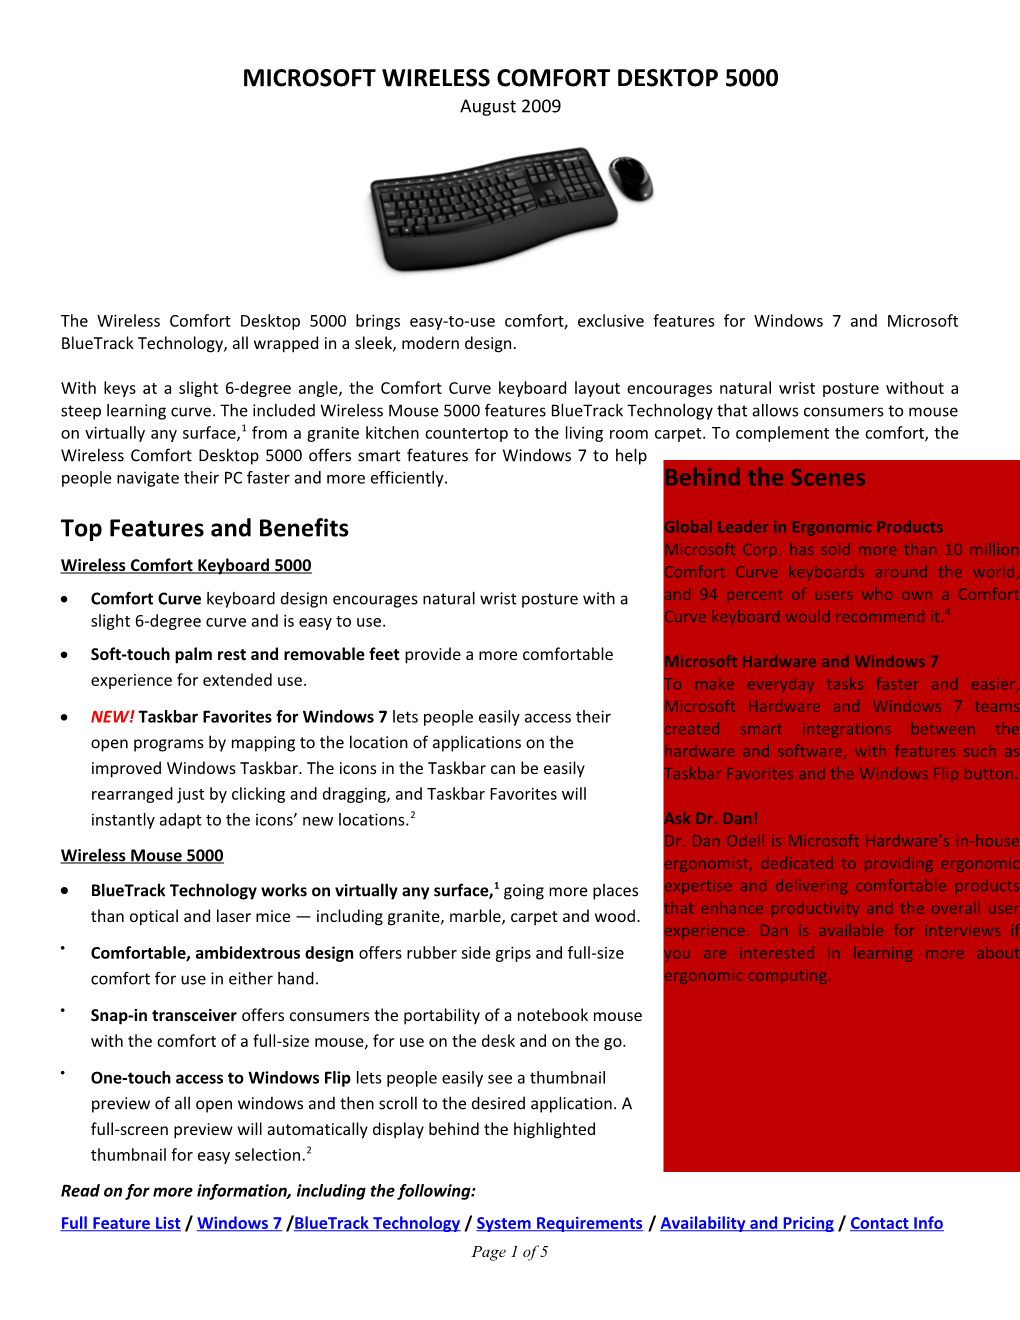 Microsoft Wireless Comfort Desktop 5000